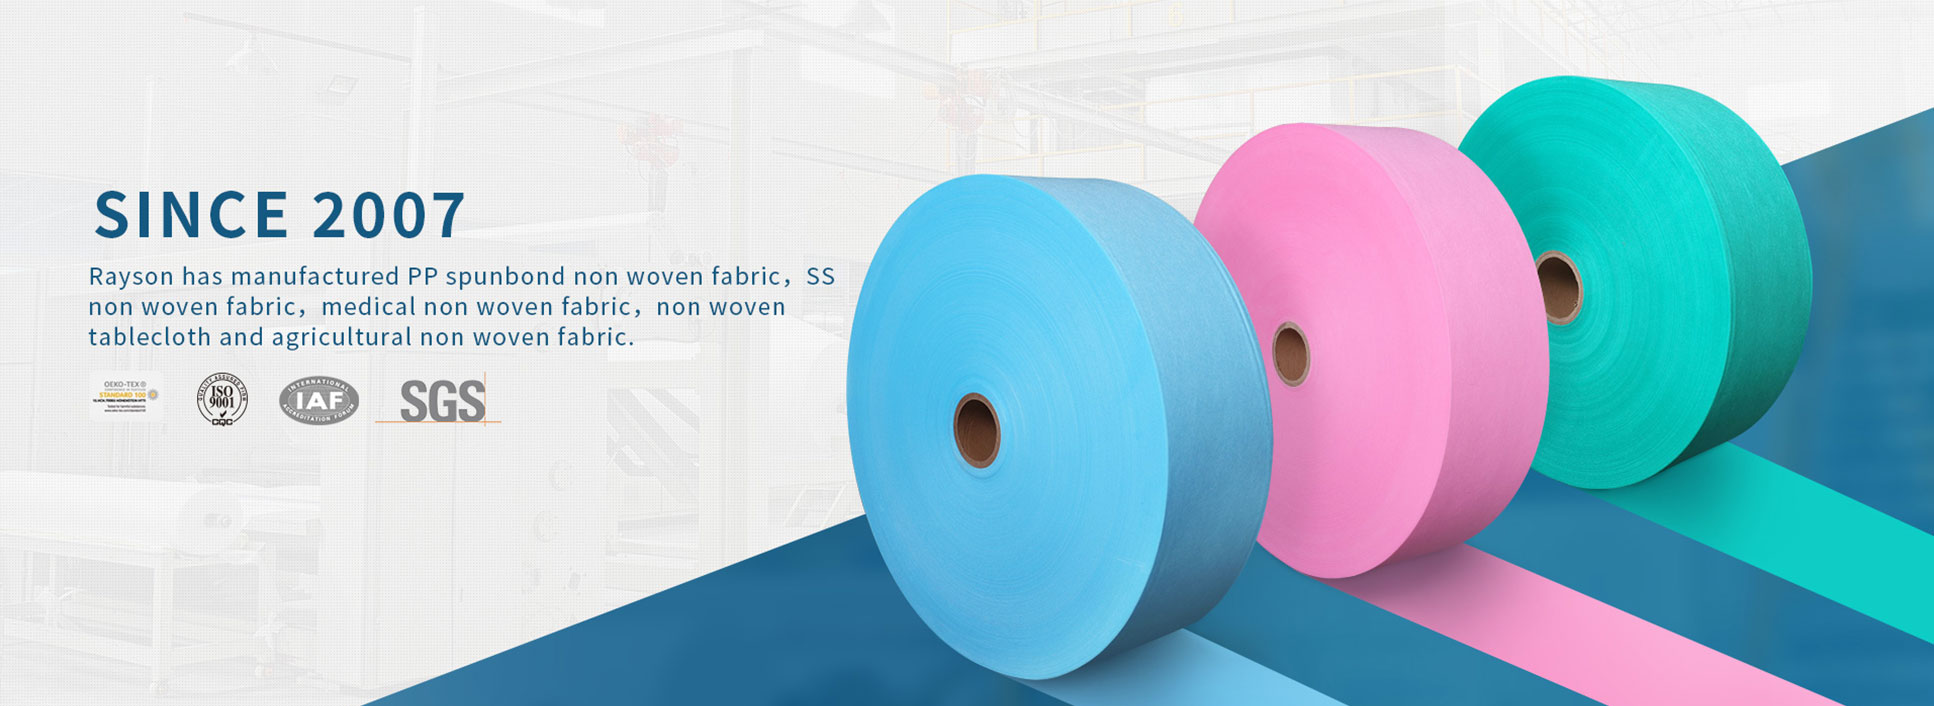 rayson nonwoven-non woven fabric manufacturer-img-3